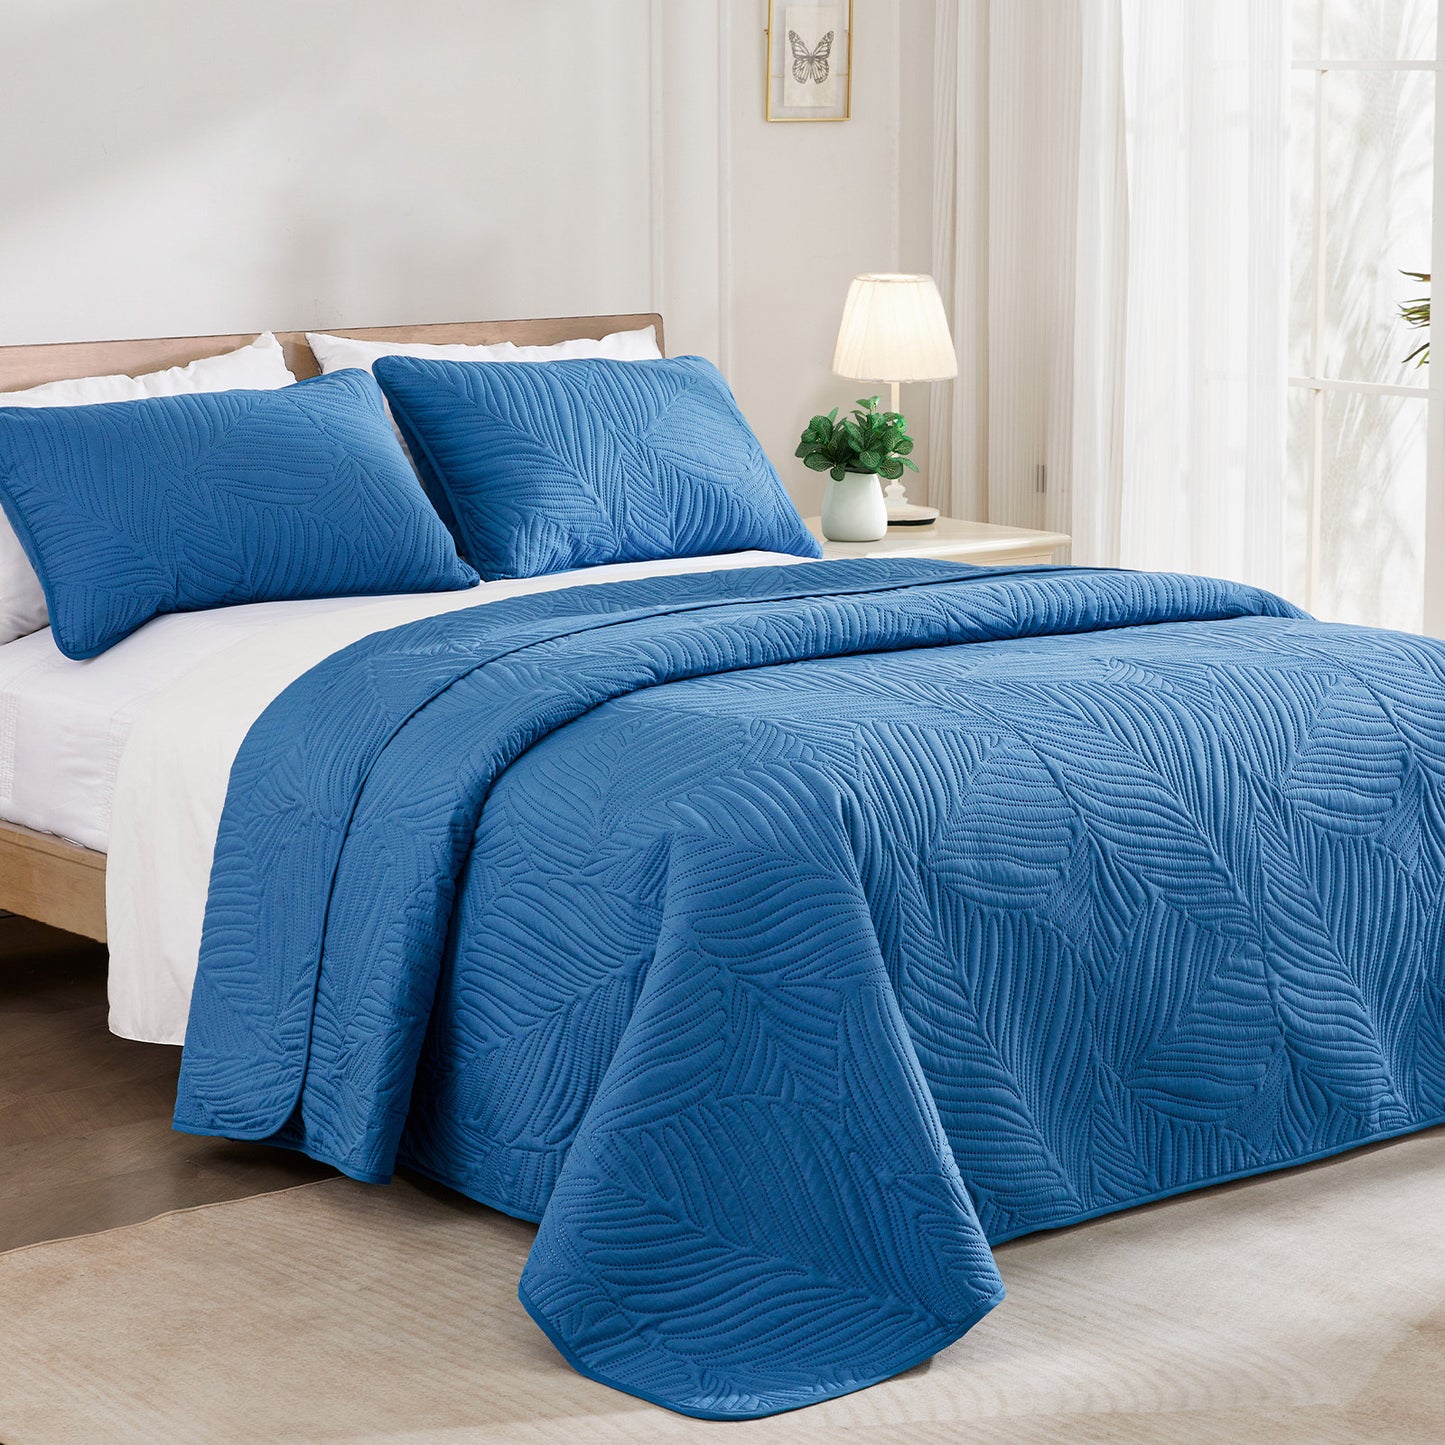 Exclusivo Mezcla California King Quilt Set Dark Blue, Lightweight Bedspread Leaf Pattern Bed Cover Soft Coverlet Bedding Set(1 Quilt, 2 Pillow Shams)